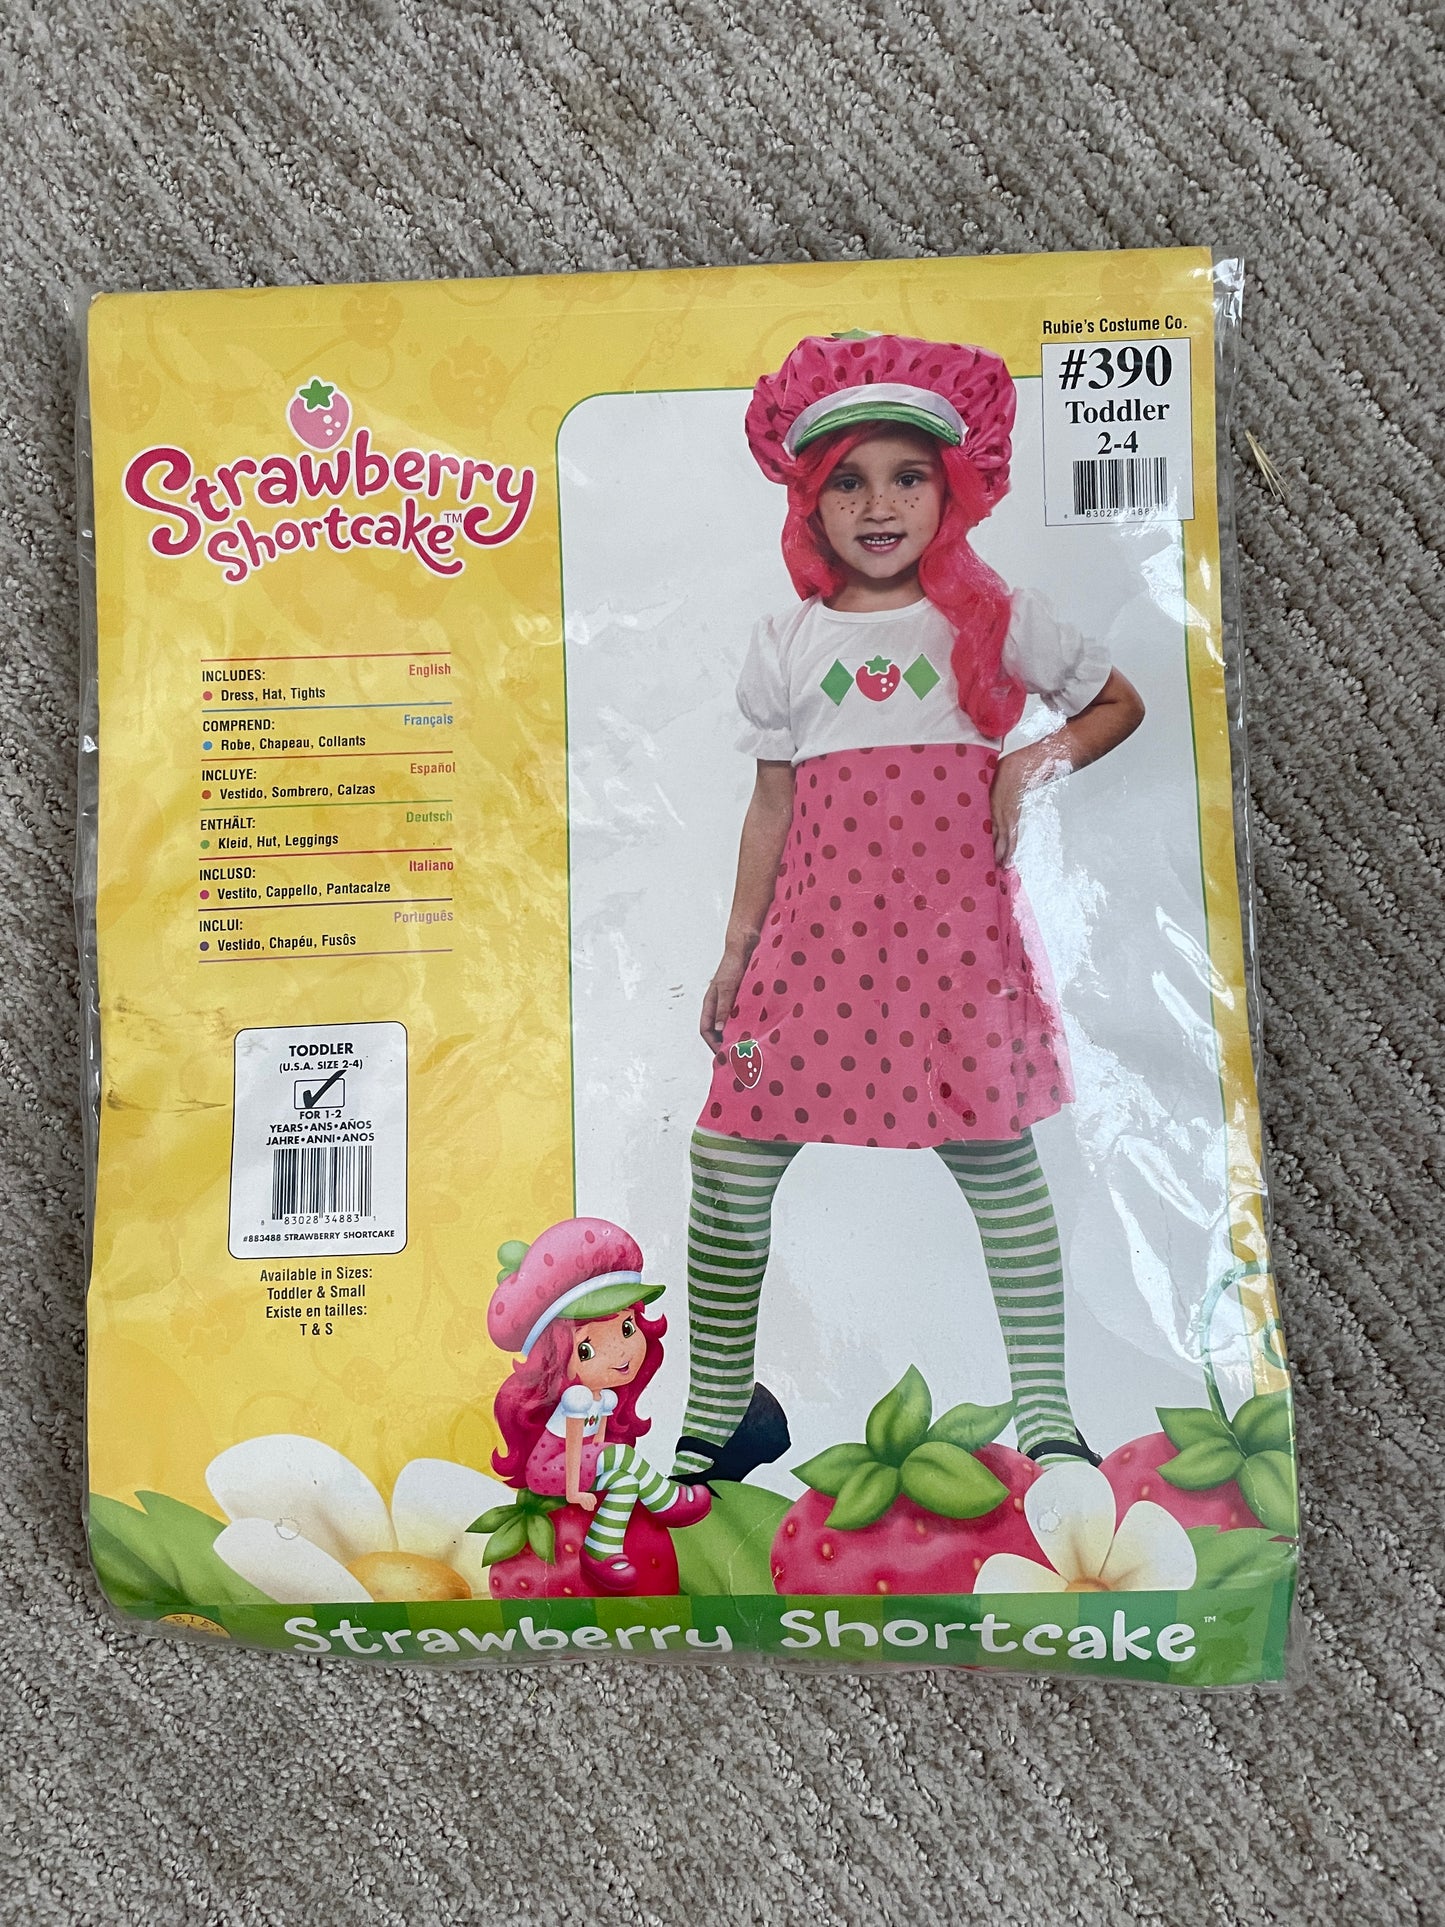 Strawberry Shortcake Toddler costume